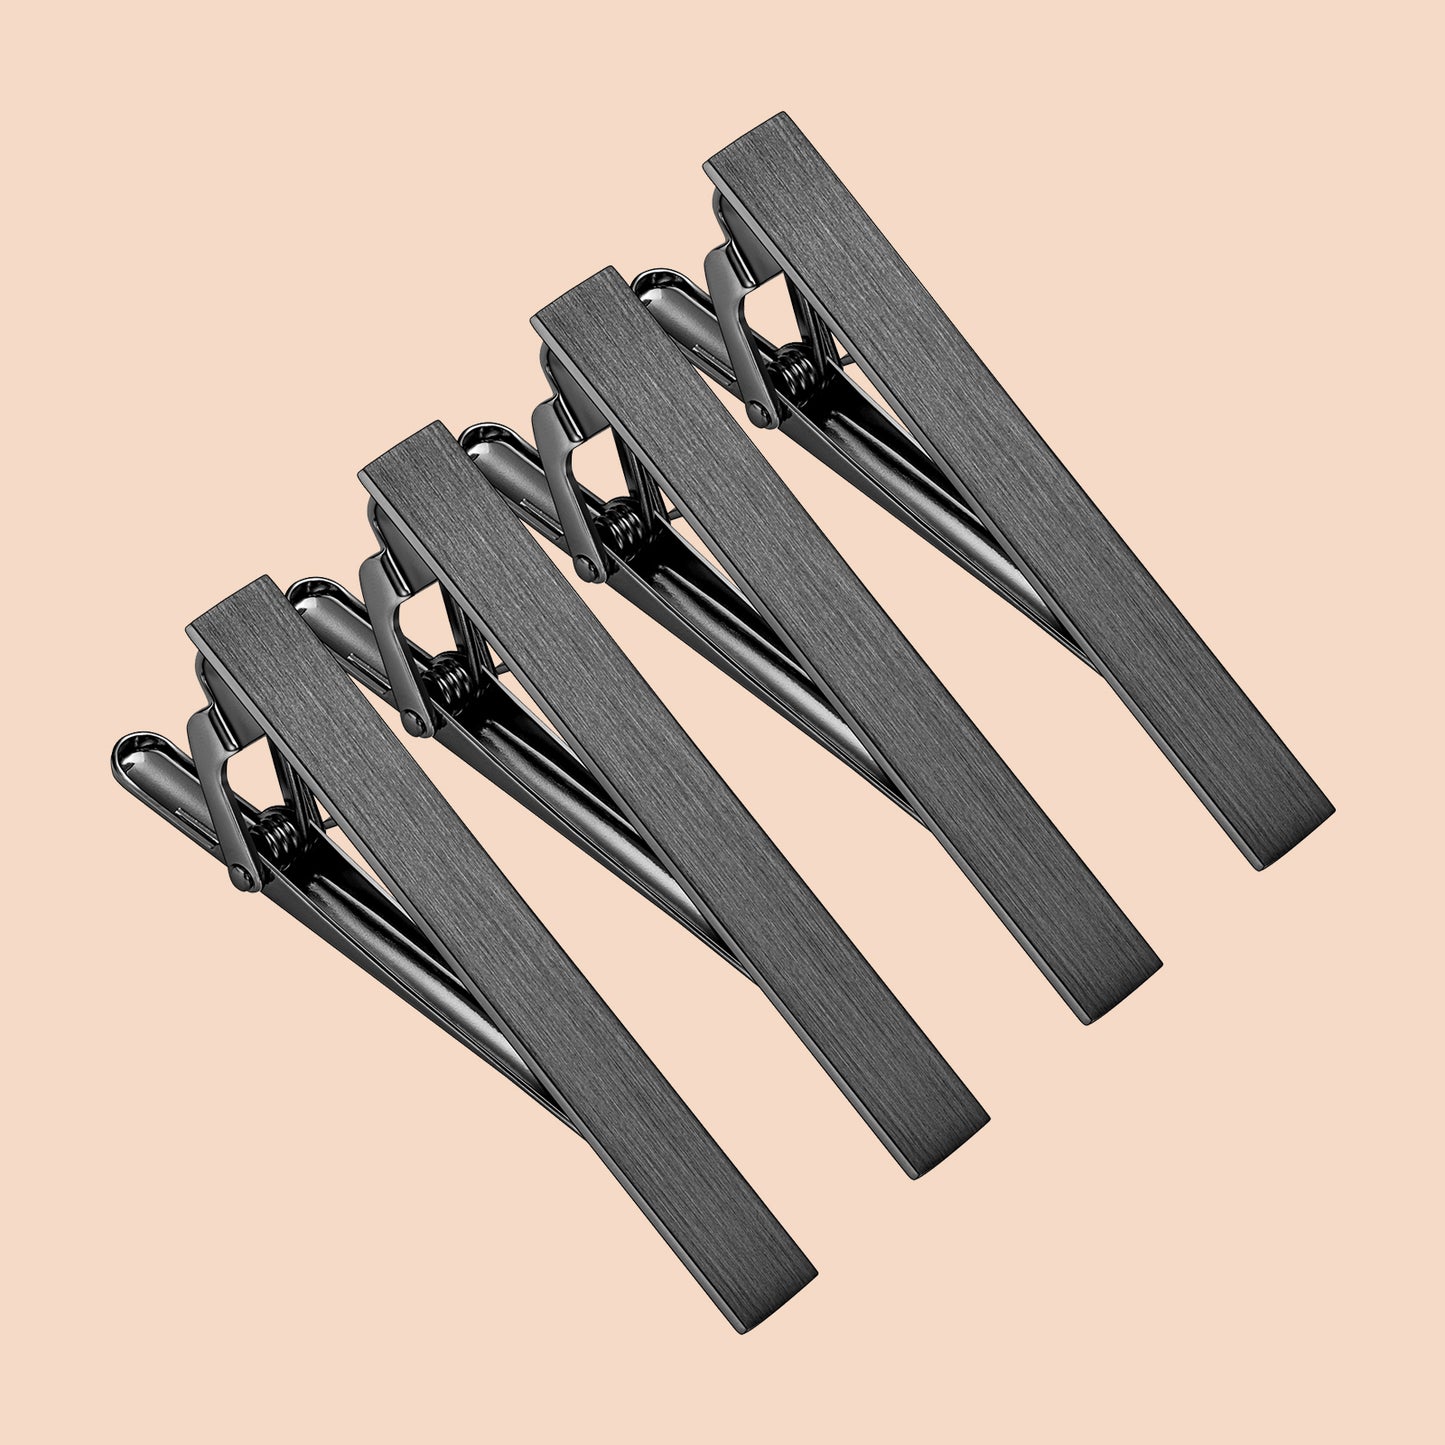 HAWSON 2.5 Inch Tie Clip Sets for Men